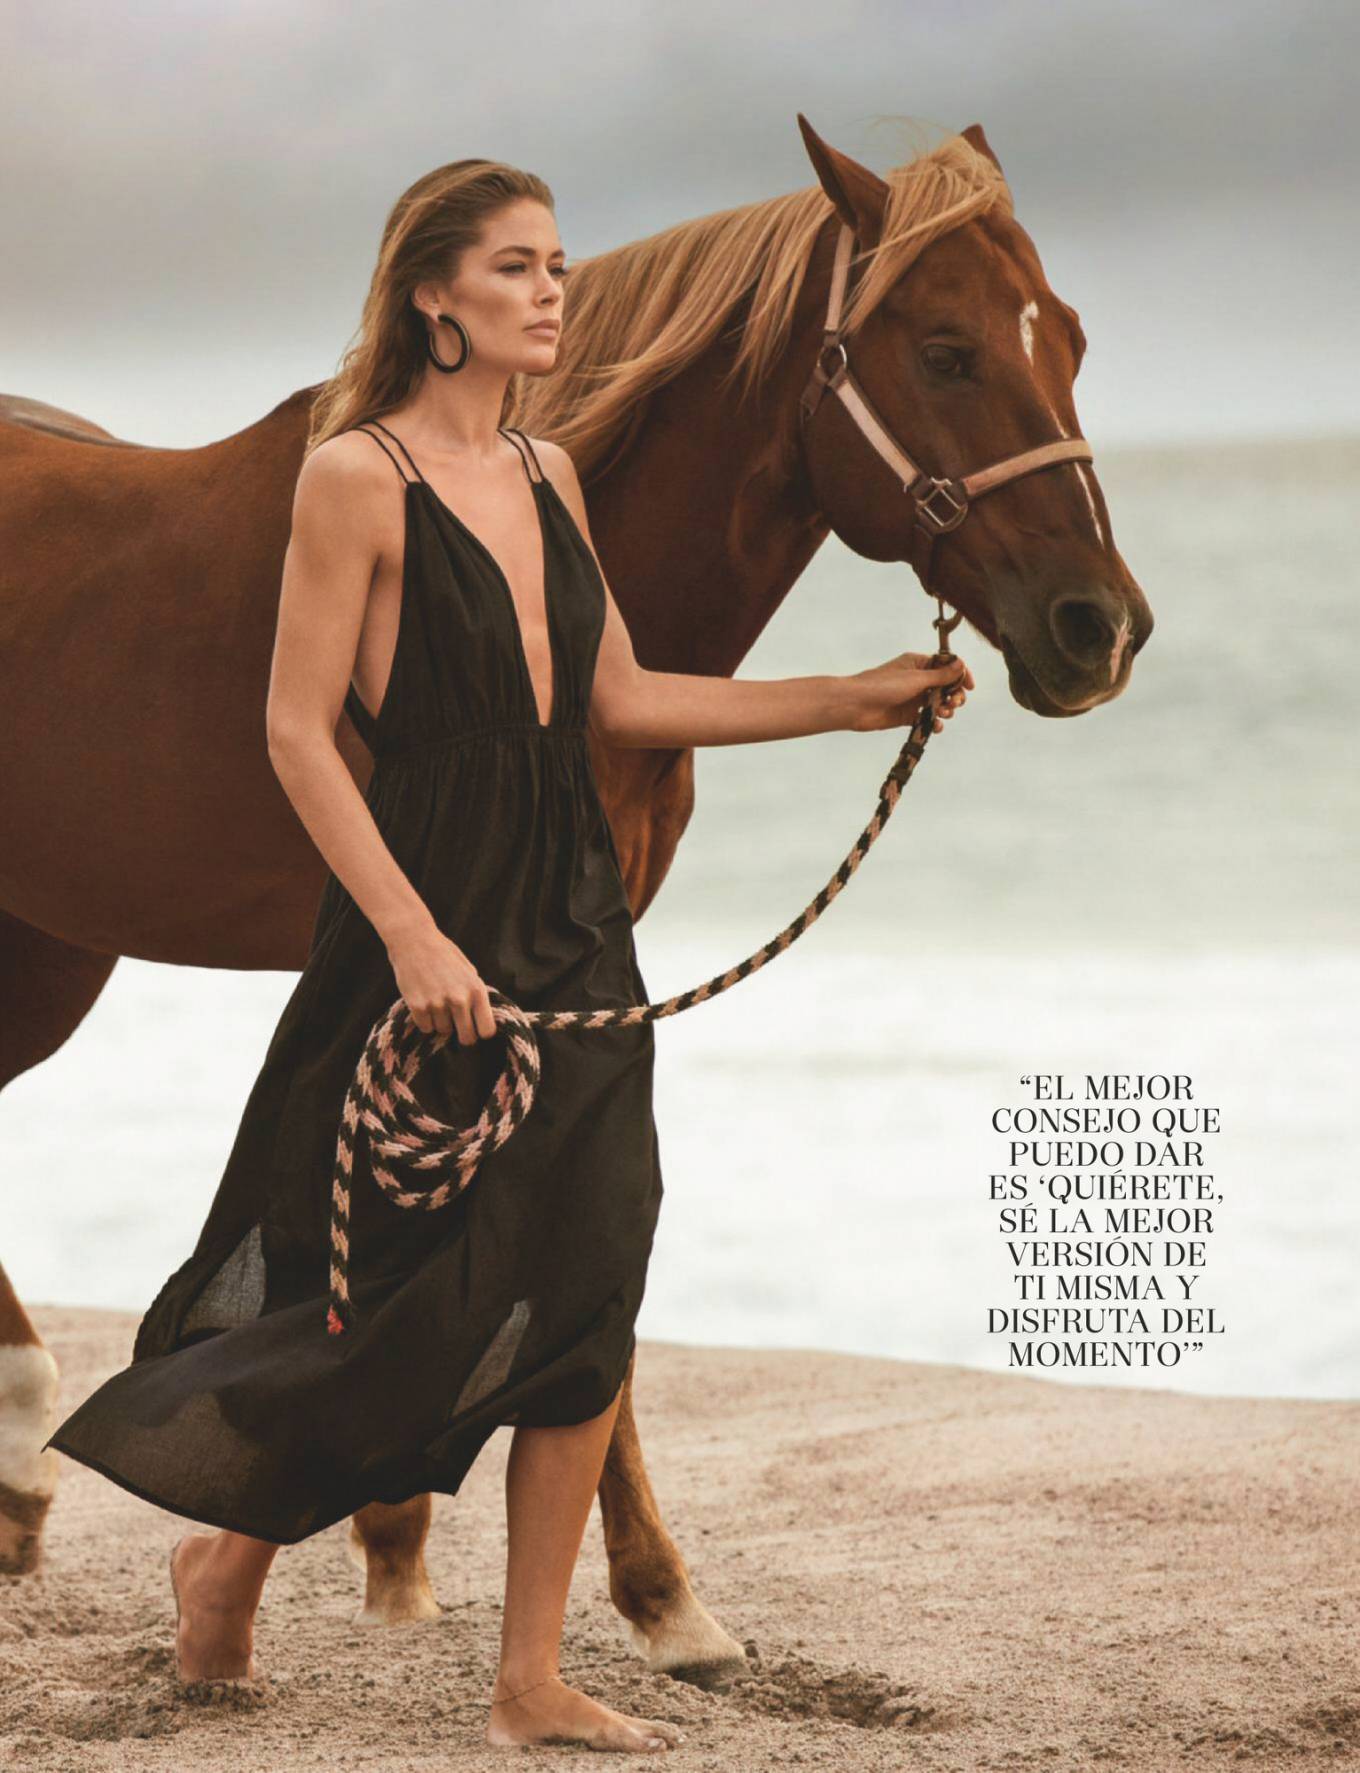 Photos n°3 : Doutzen Kroes in a Bikini with a Horse for HOLA! Magazine!